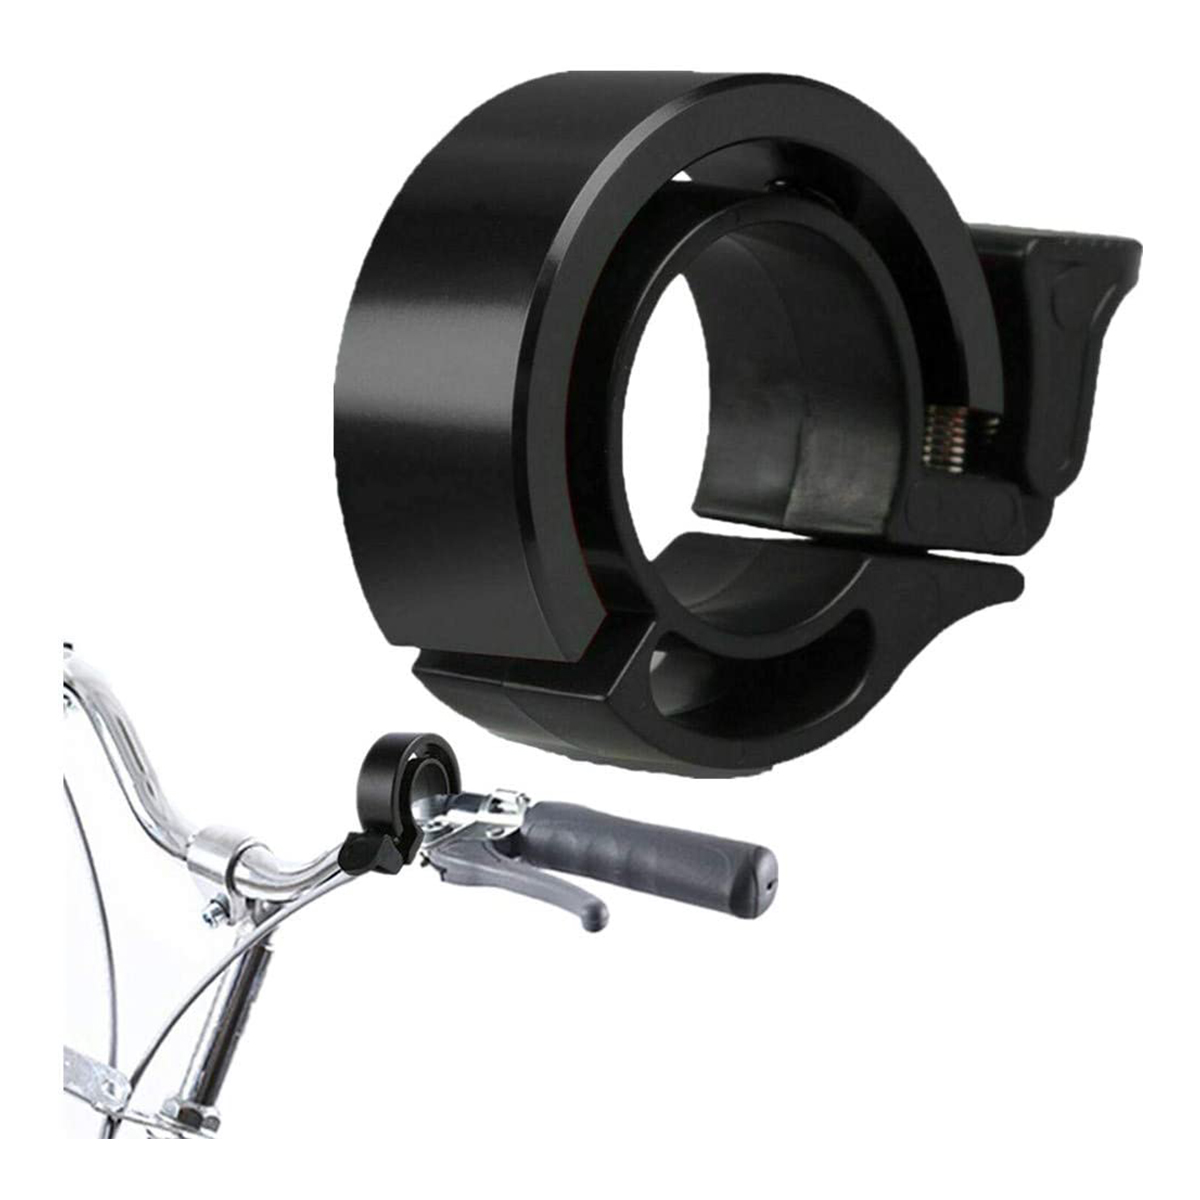 Mini Cycling Handlebar Accessories by Aluminum Alloy Crisp Loud Bicycle Bells Bike Bell Horn Ring